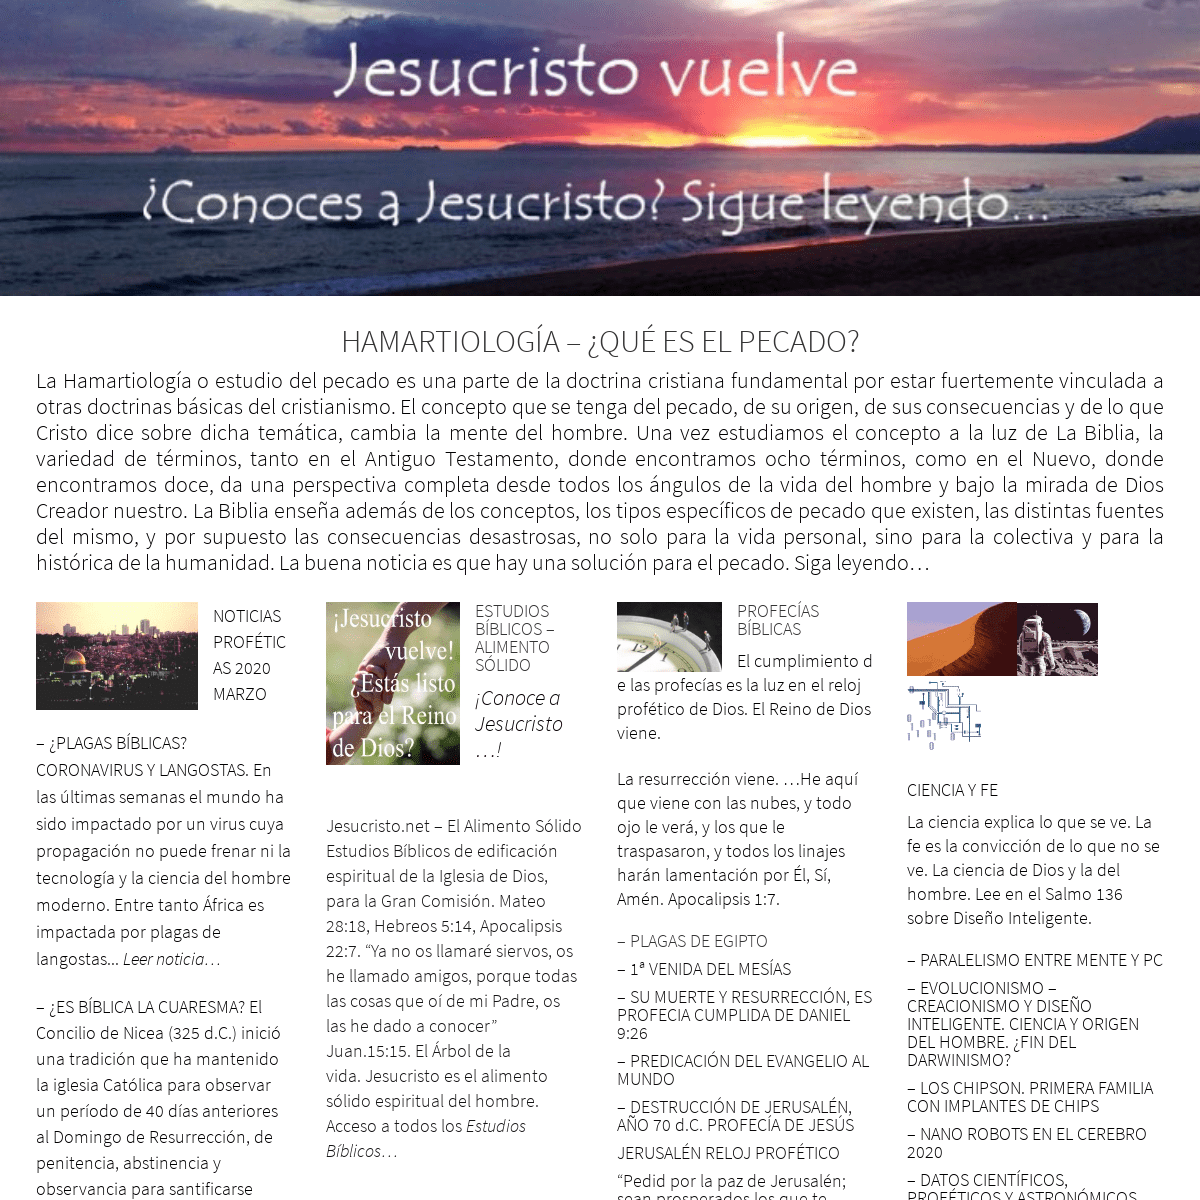 A complete backup of jesucristo.net